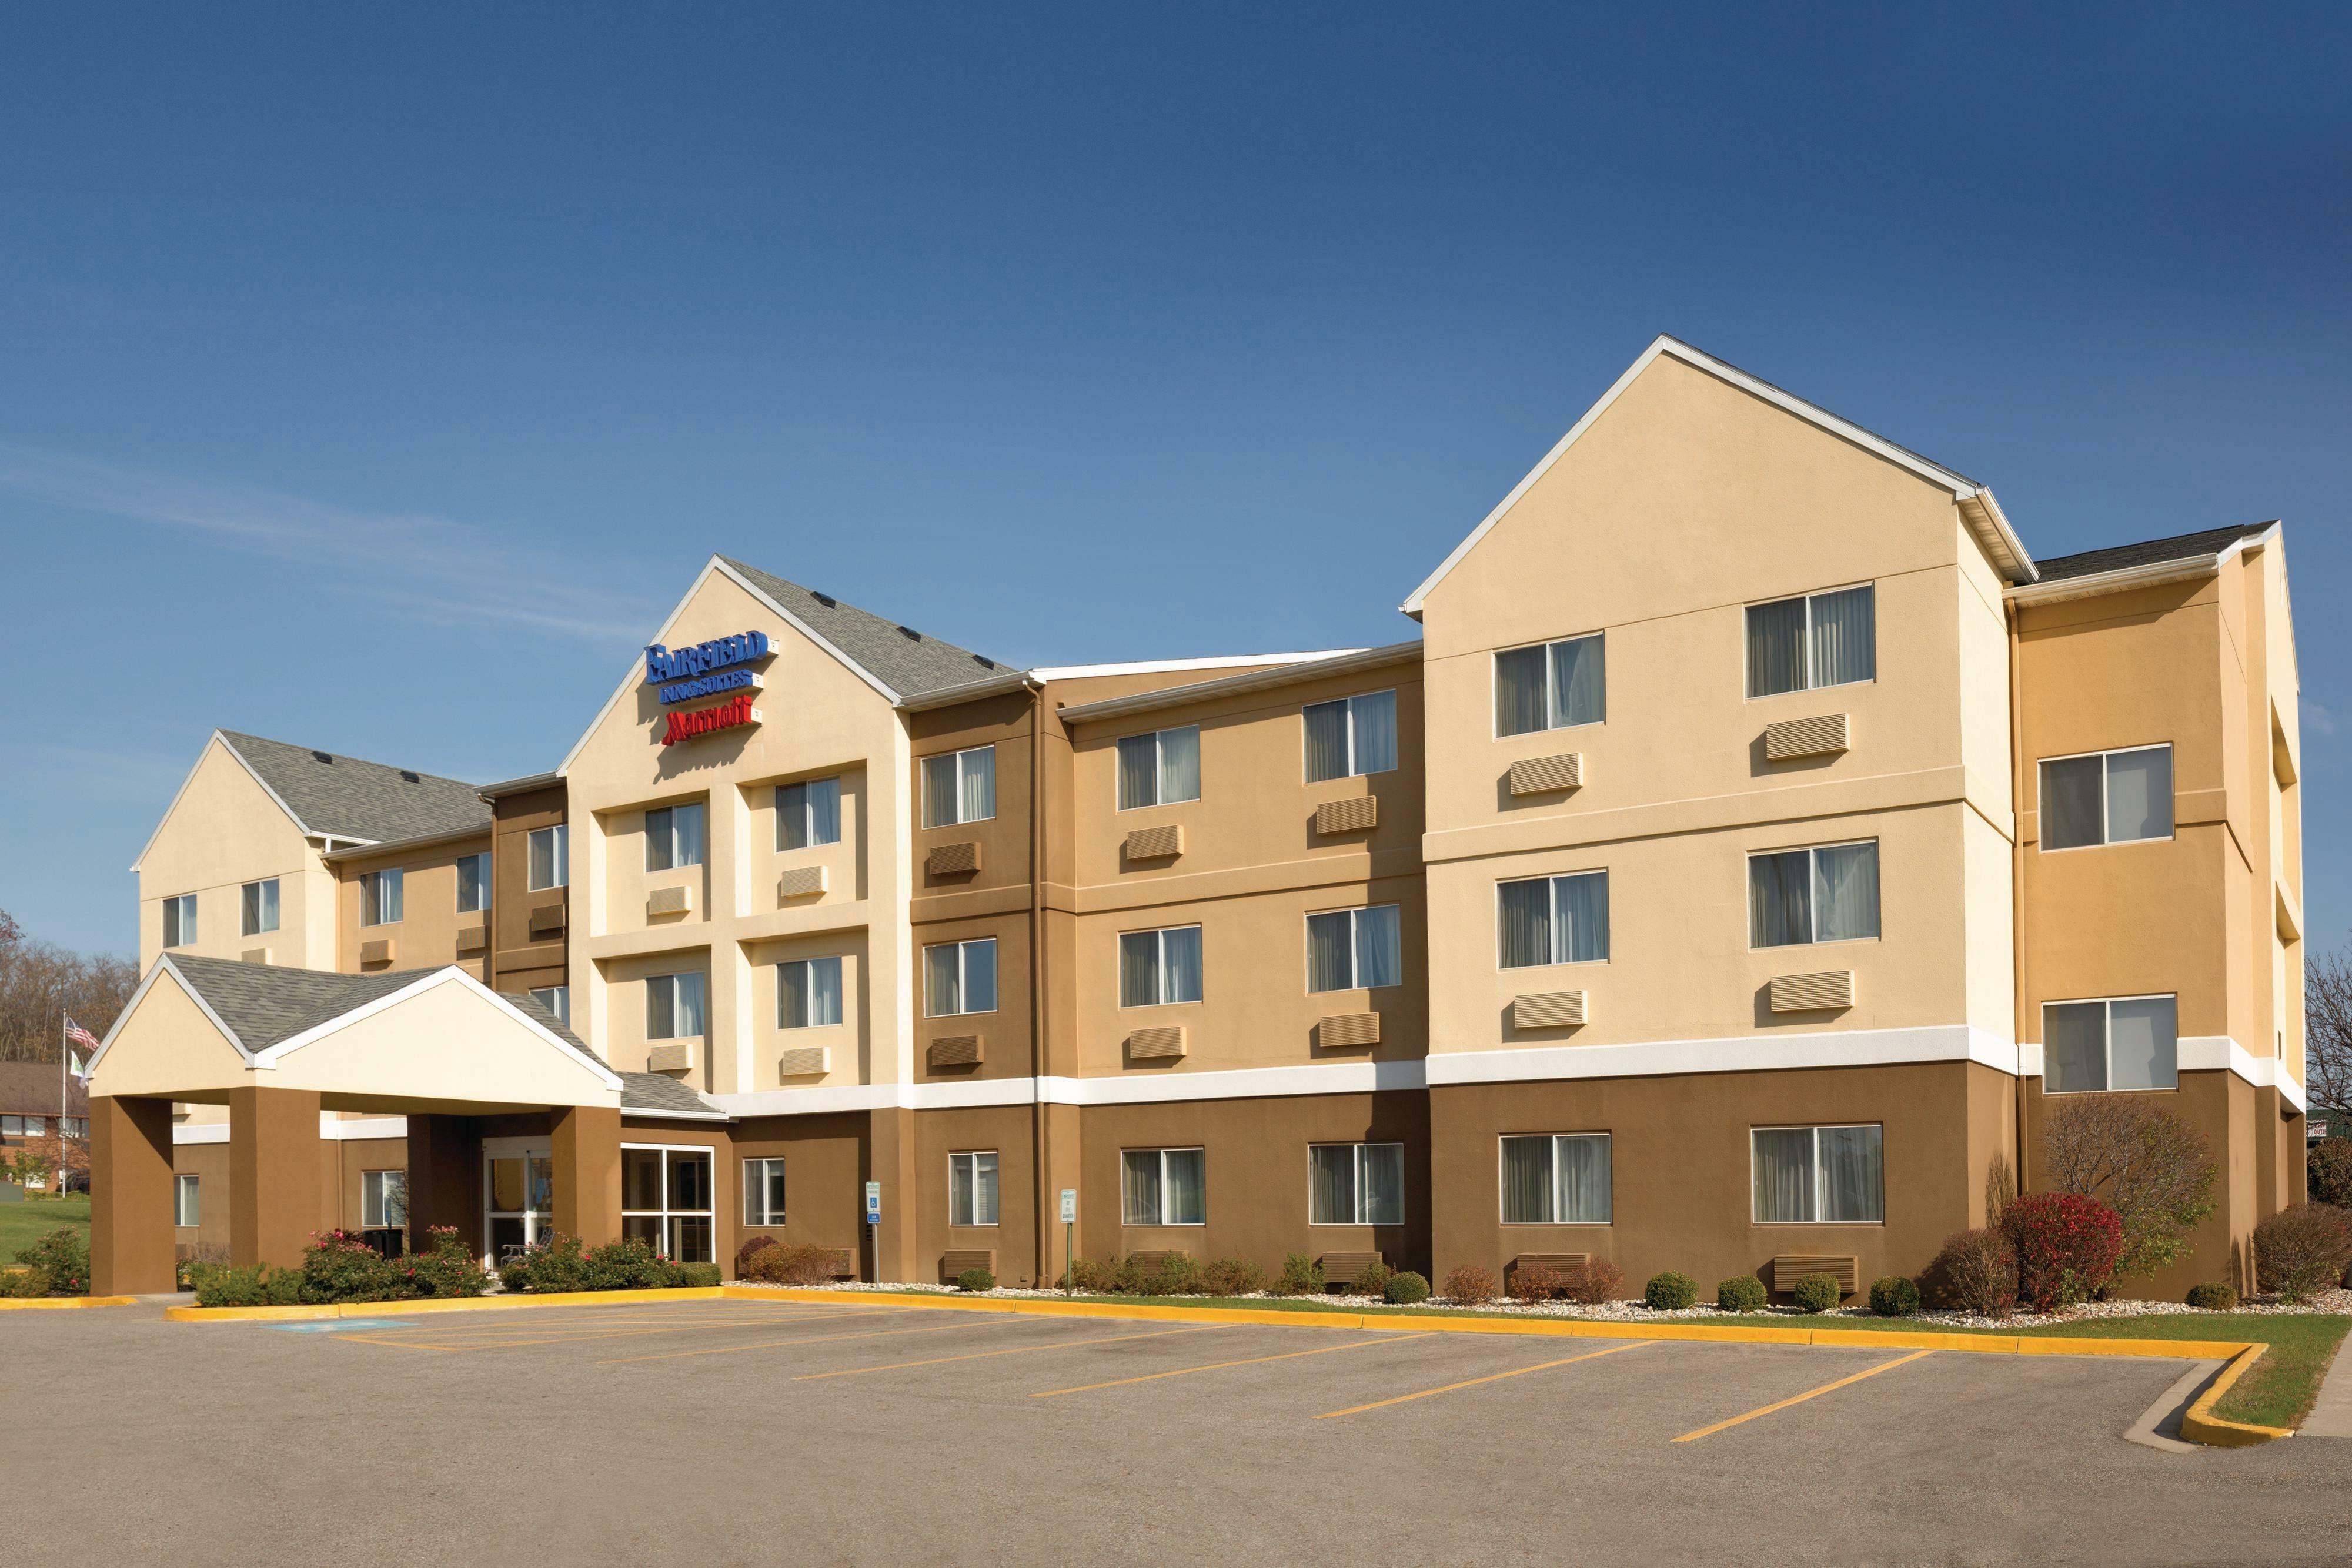 Photo of Fairfield Inn & Suites South Bend Mishawaka, Mishawaka, IN